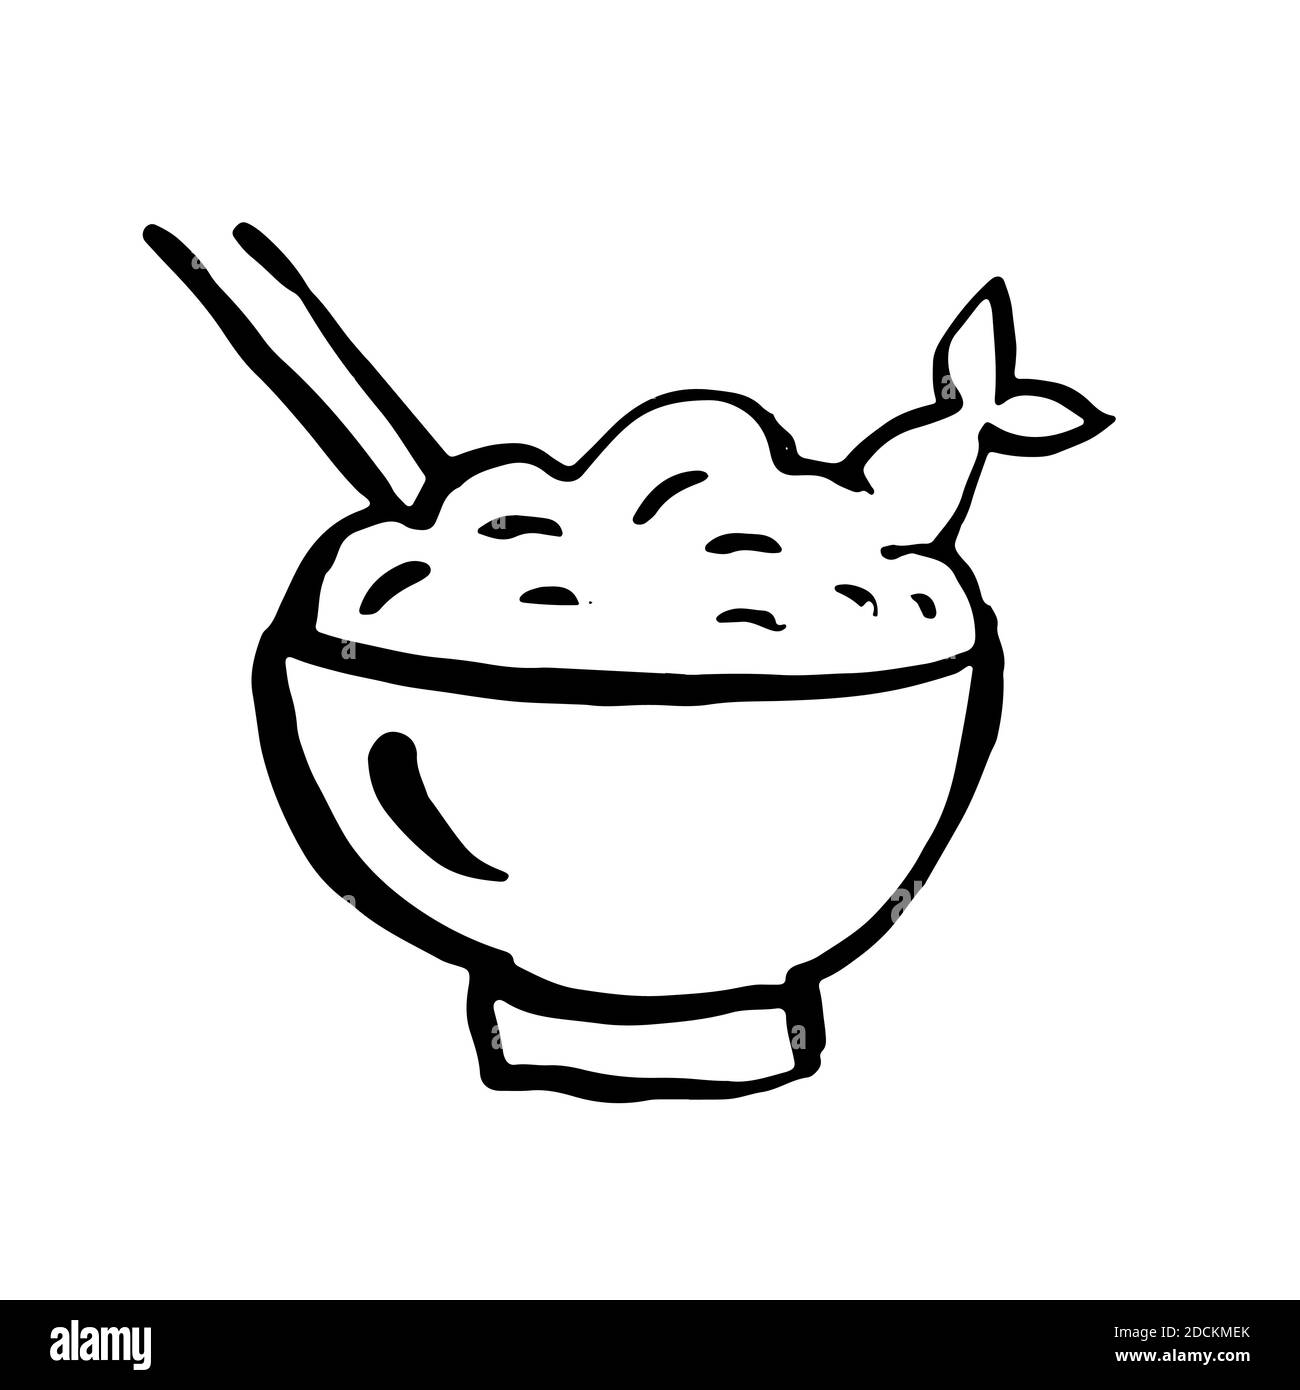 Noodles icon. Ink brush vector illustration. Food flat illustration Stock Vector